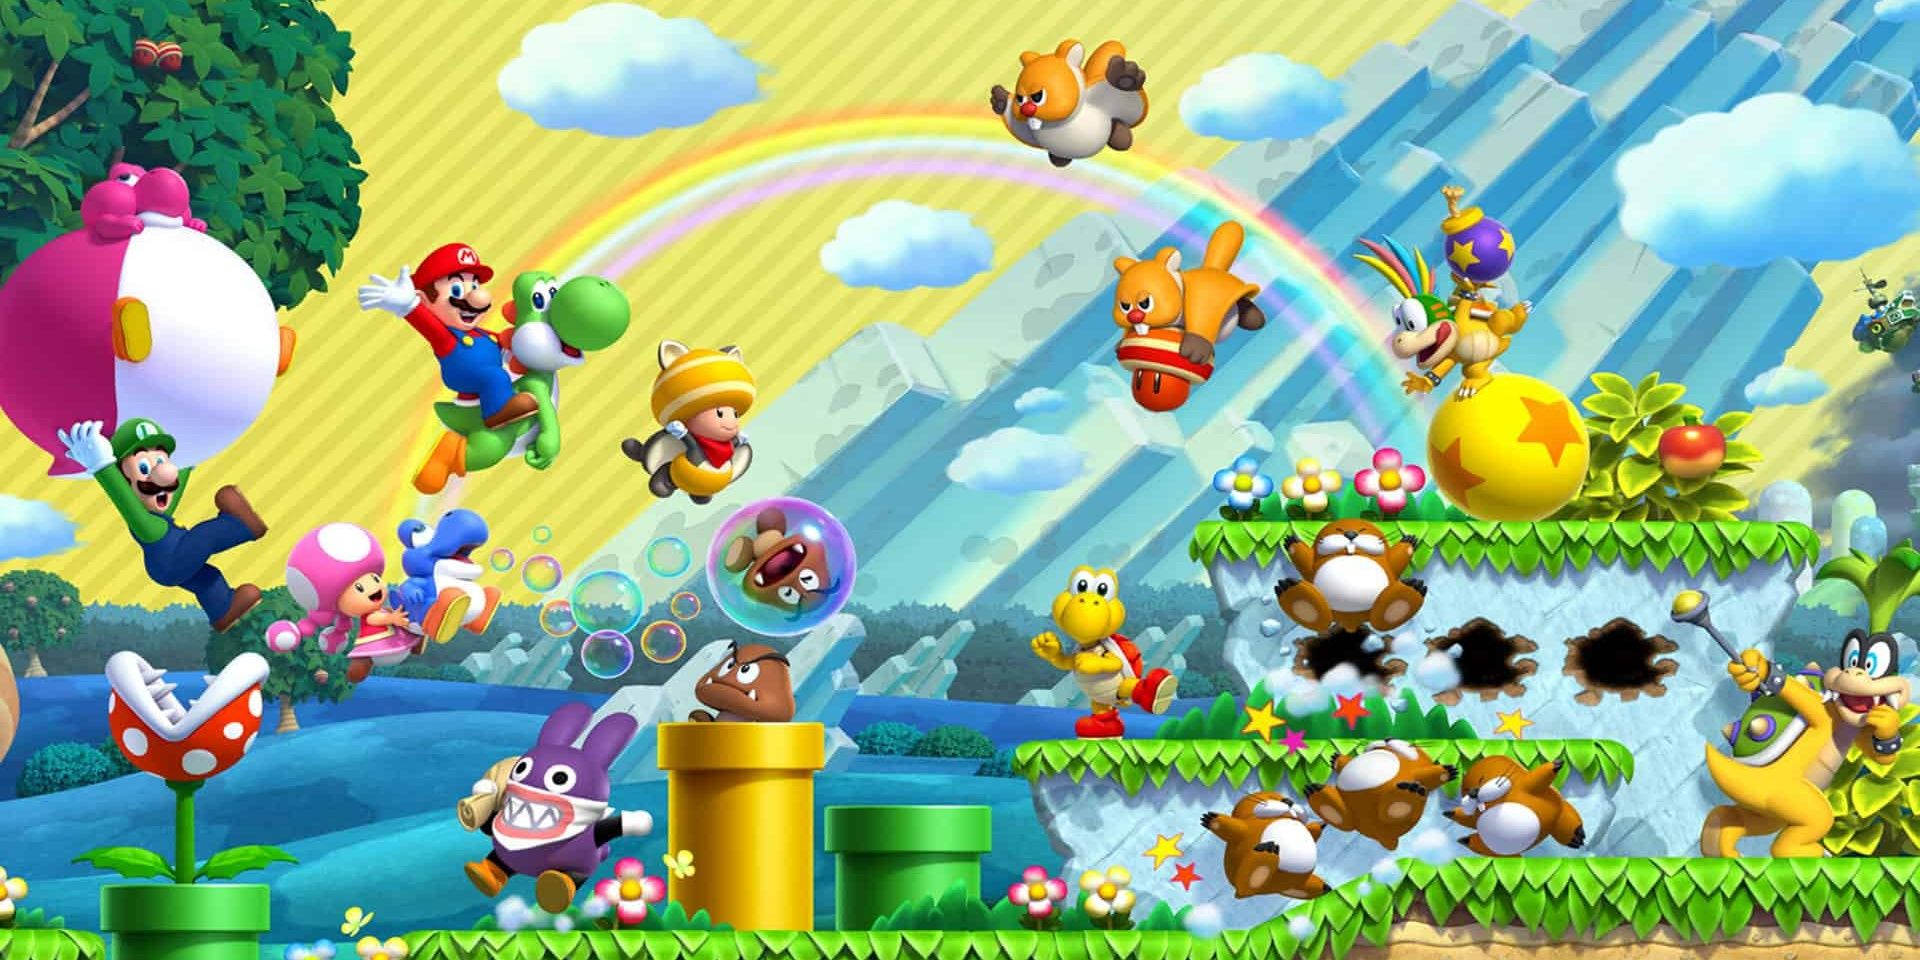 Promotional art for New Super Mario Bros. U Deluxe